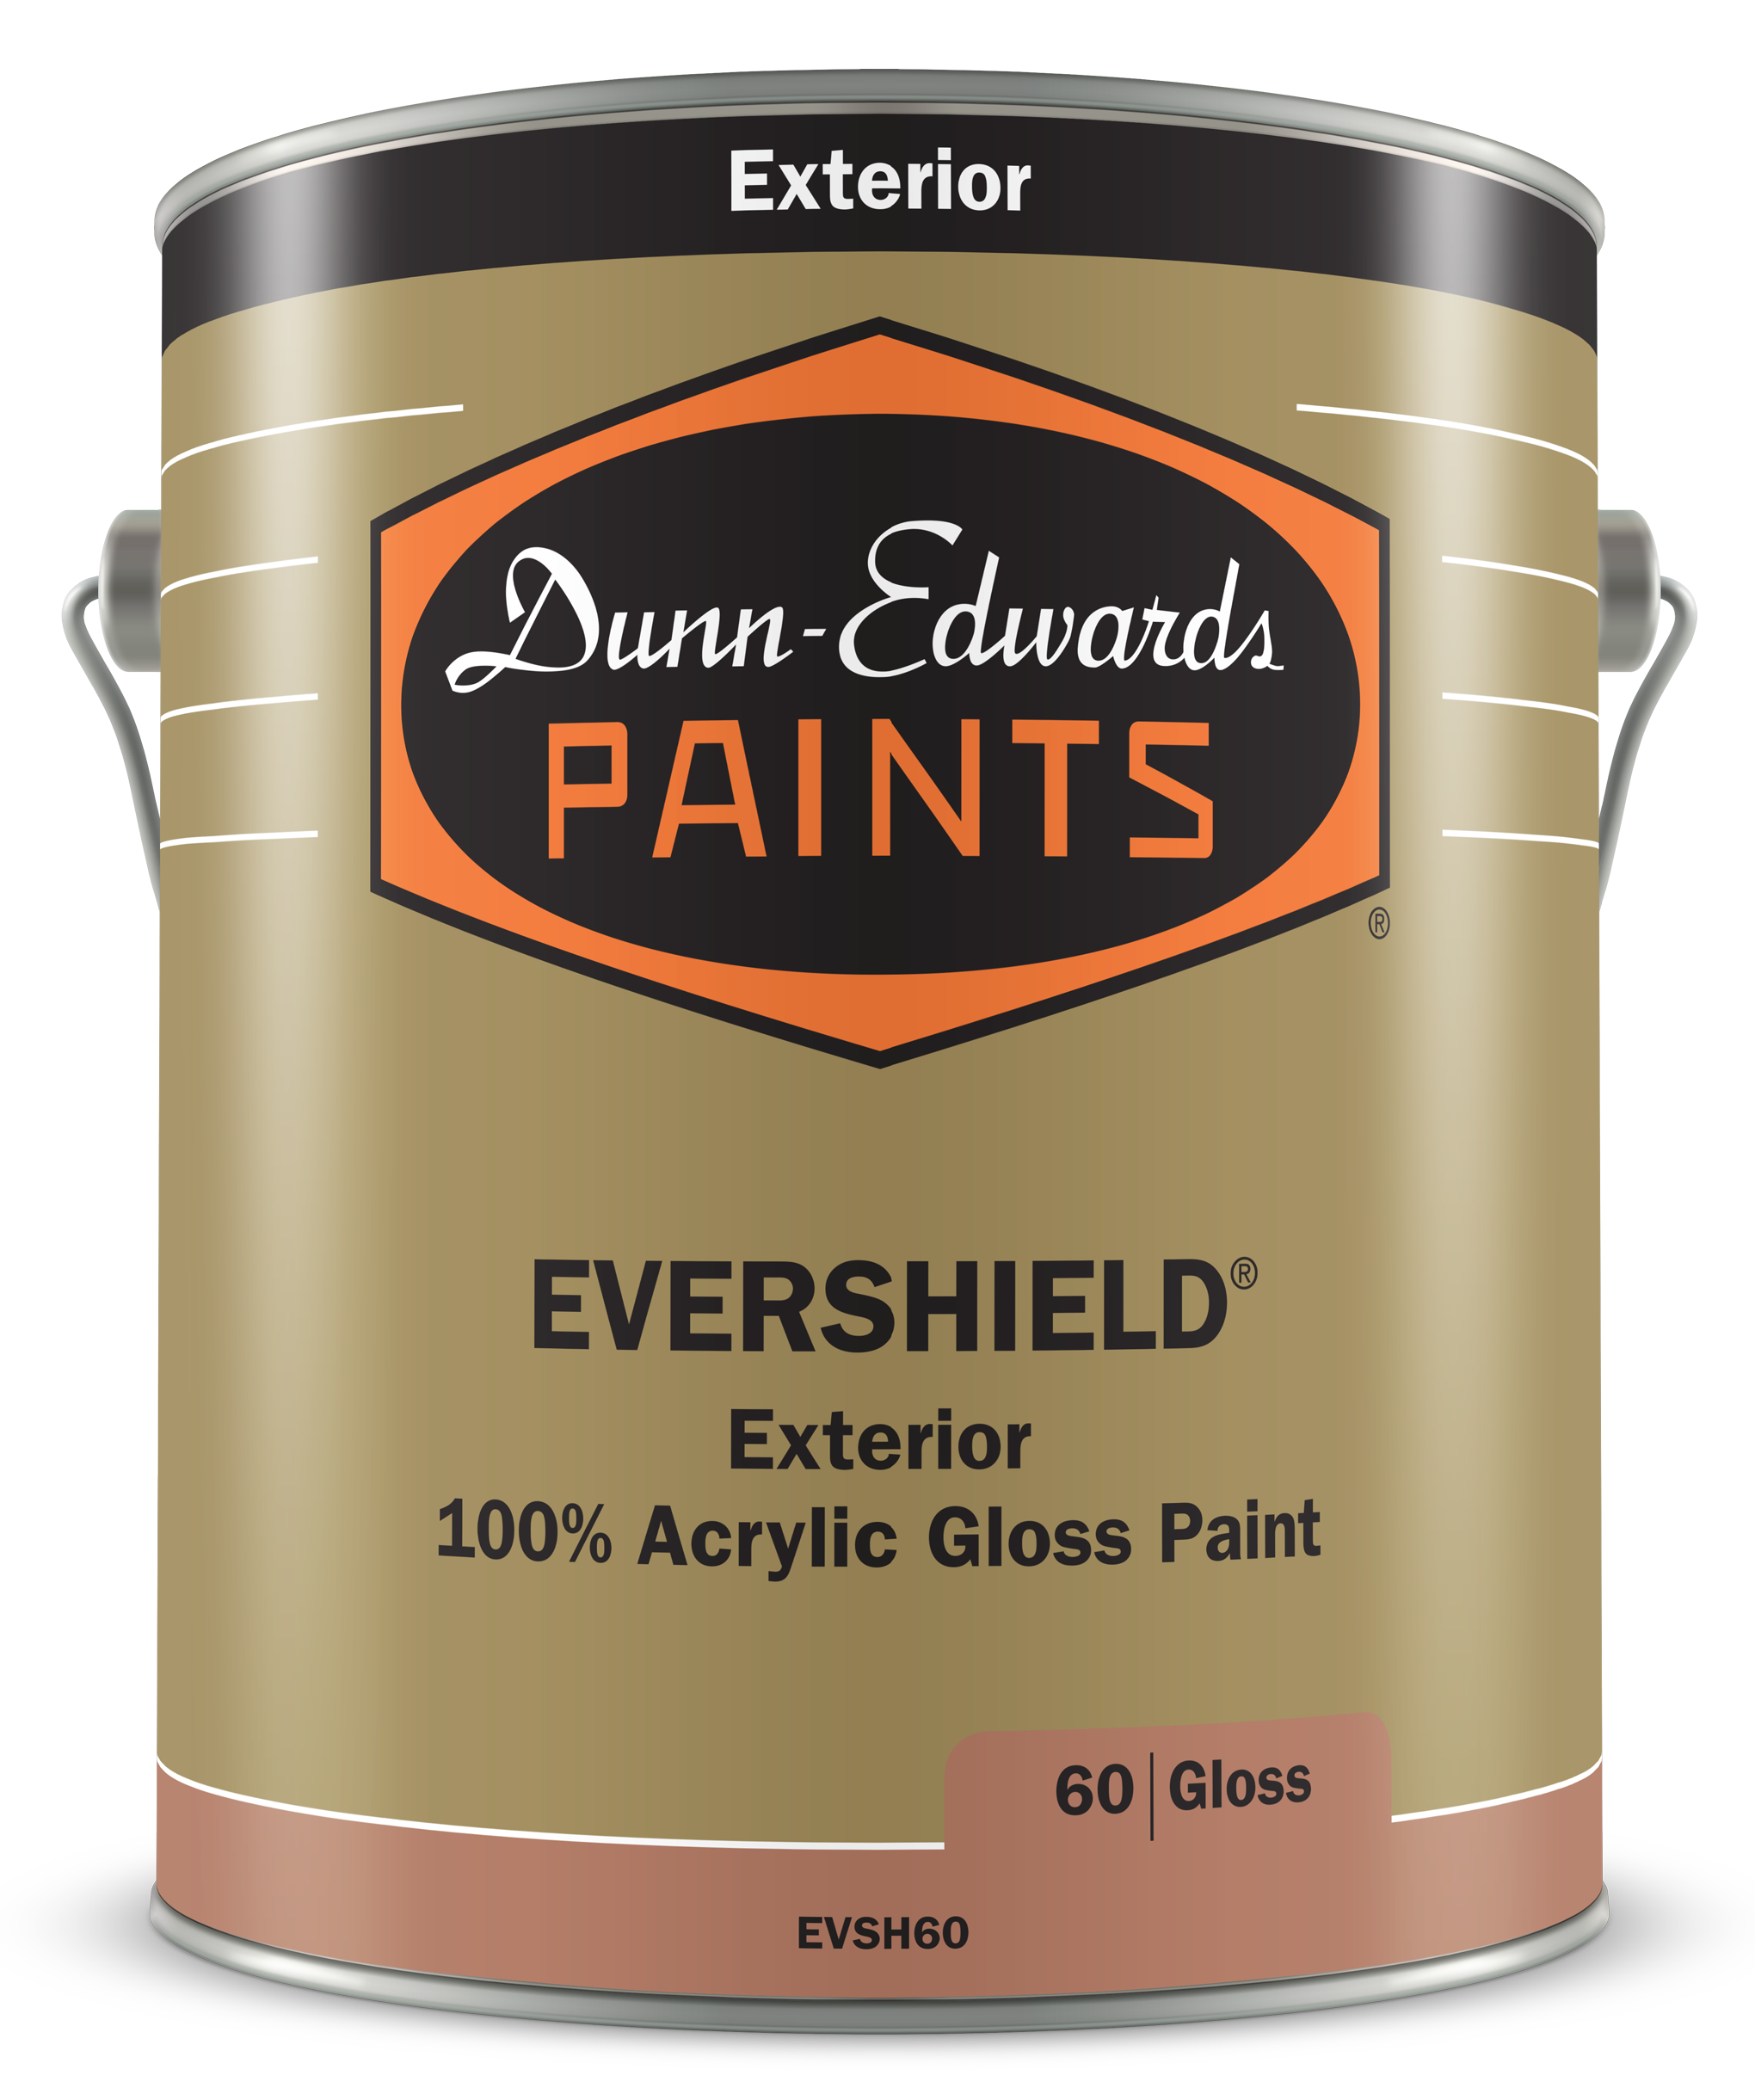 EVERSHIELD Exterior 100% Acrylic Gloss Paint Can